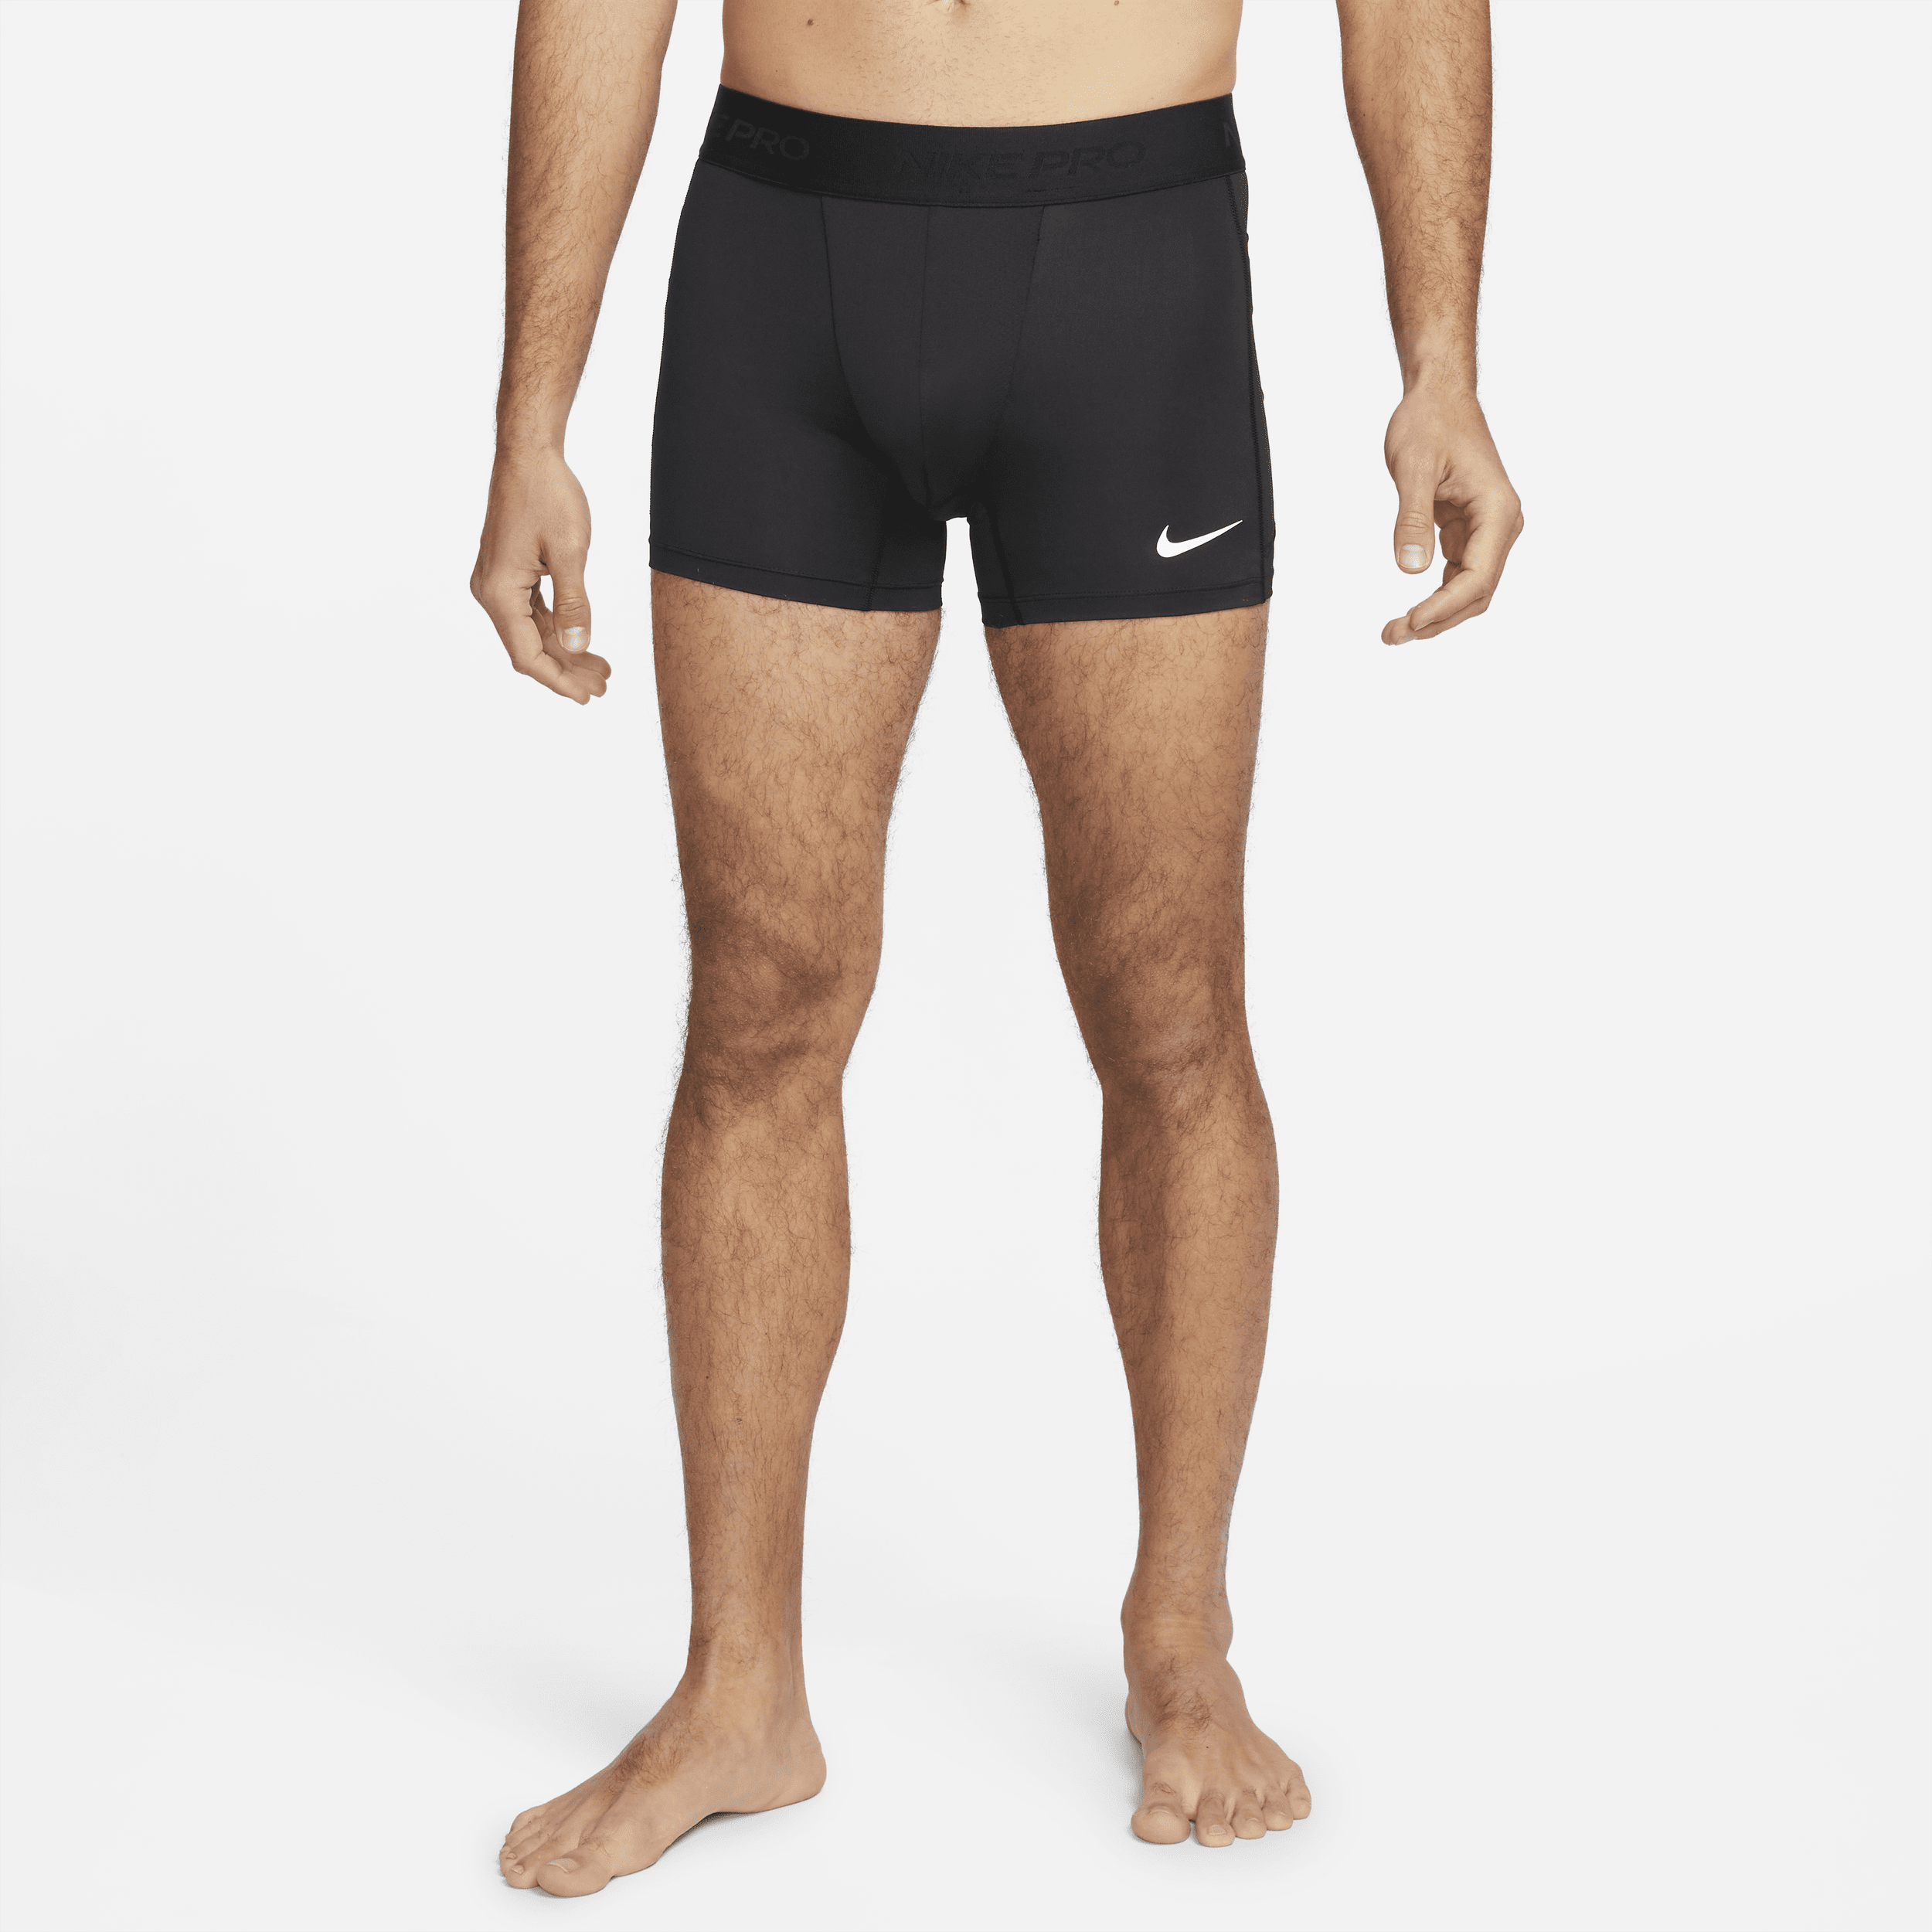 Shorts modello slip Dri-FIT Nike Pro – Uomo - Nero